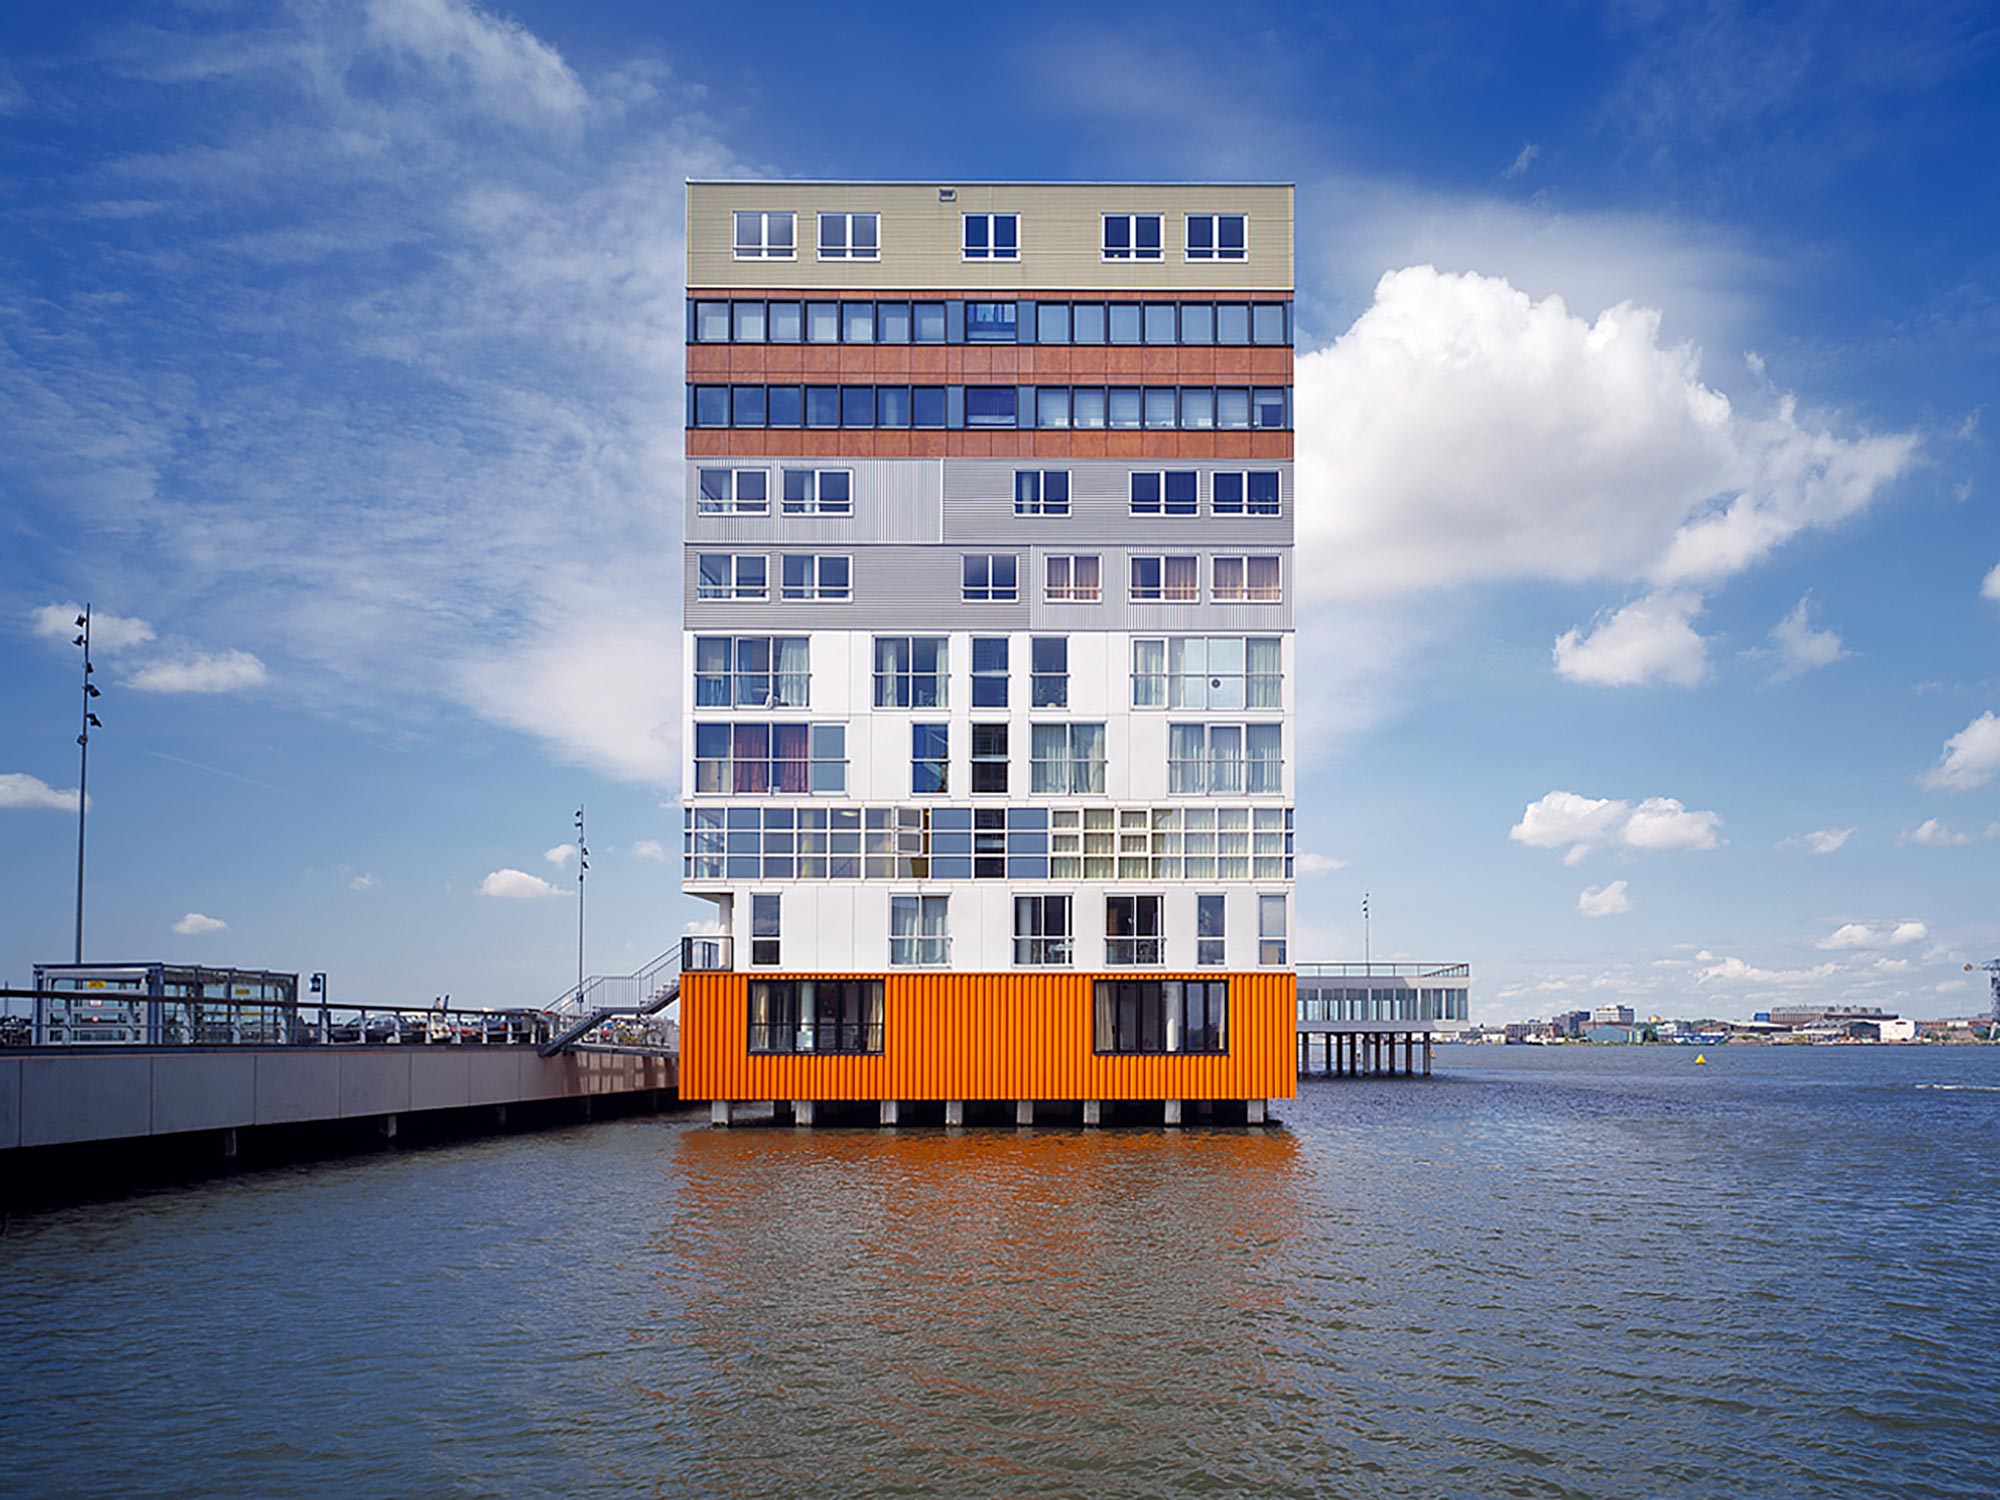 Exterior - Silodam Housing Block in Amsterdam / MVRDV